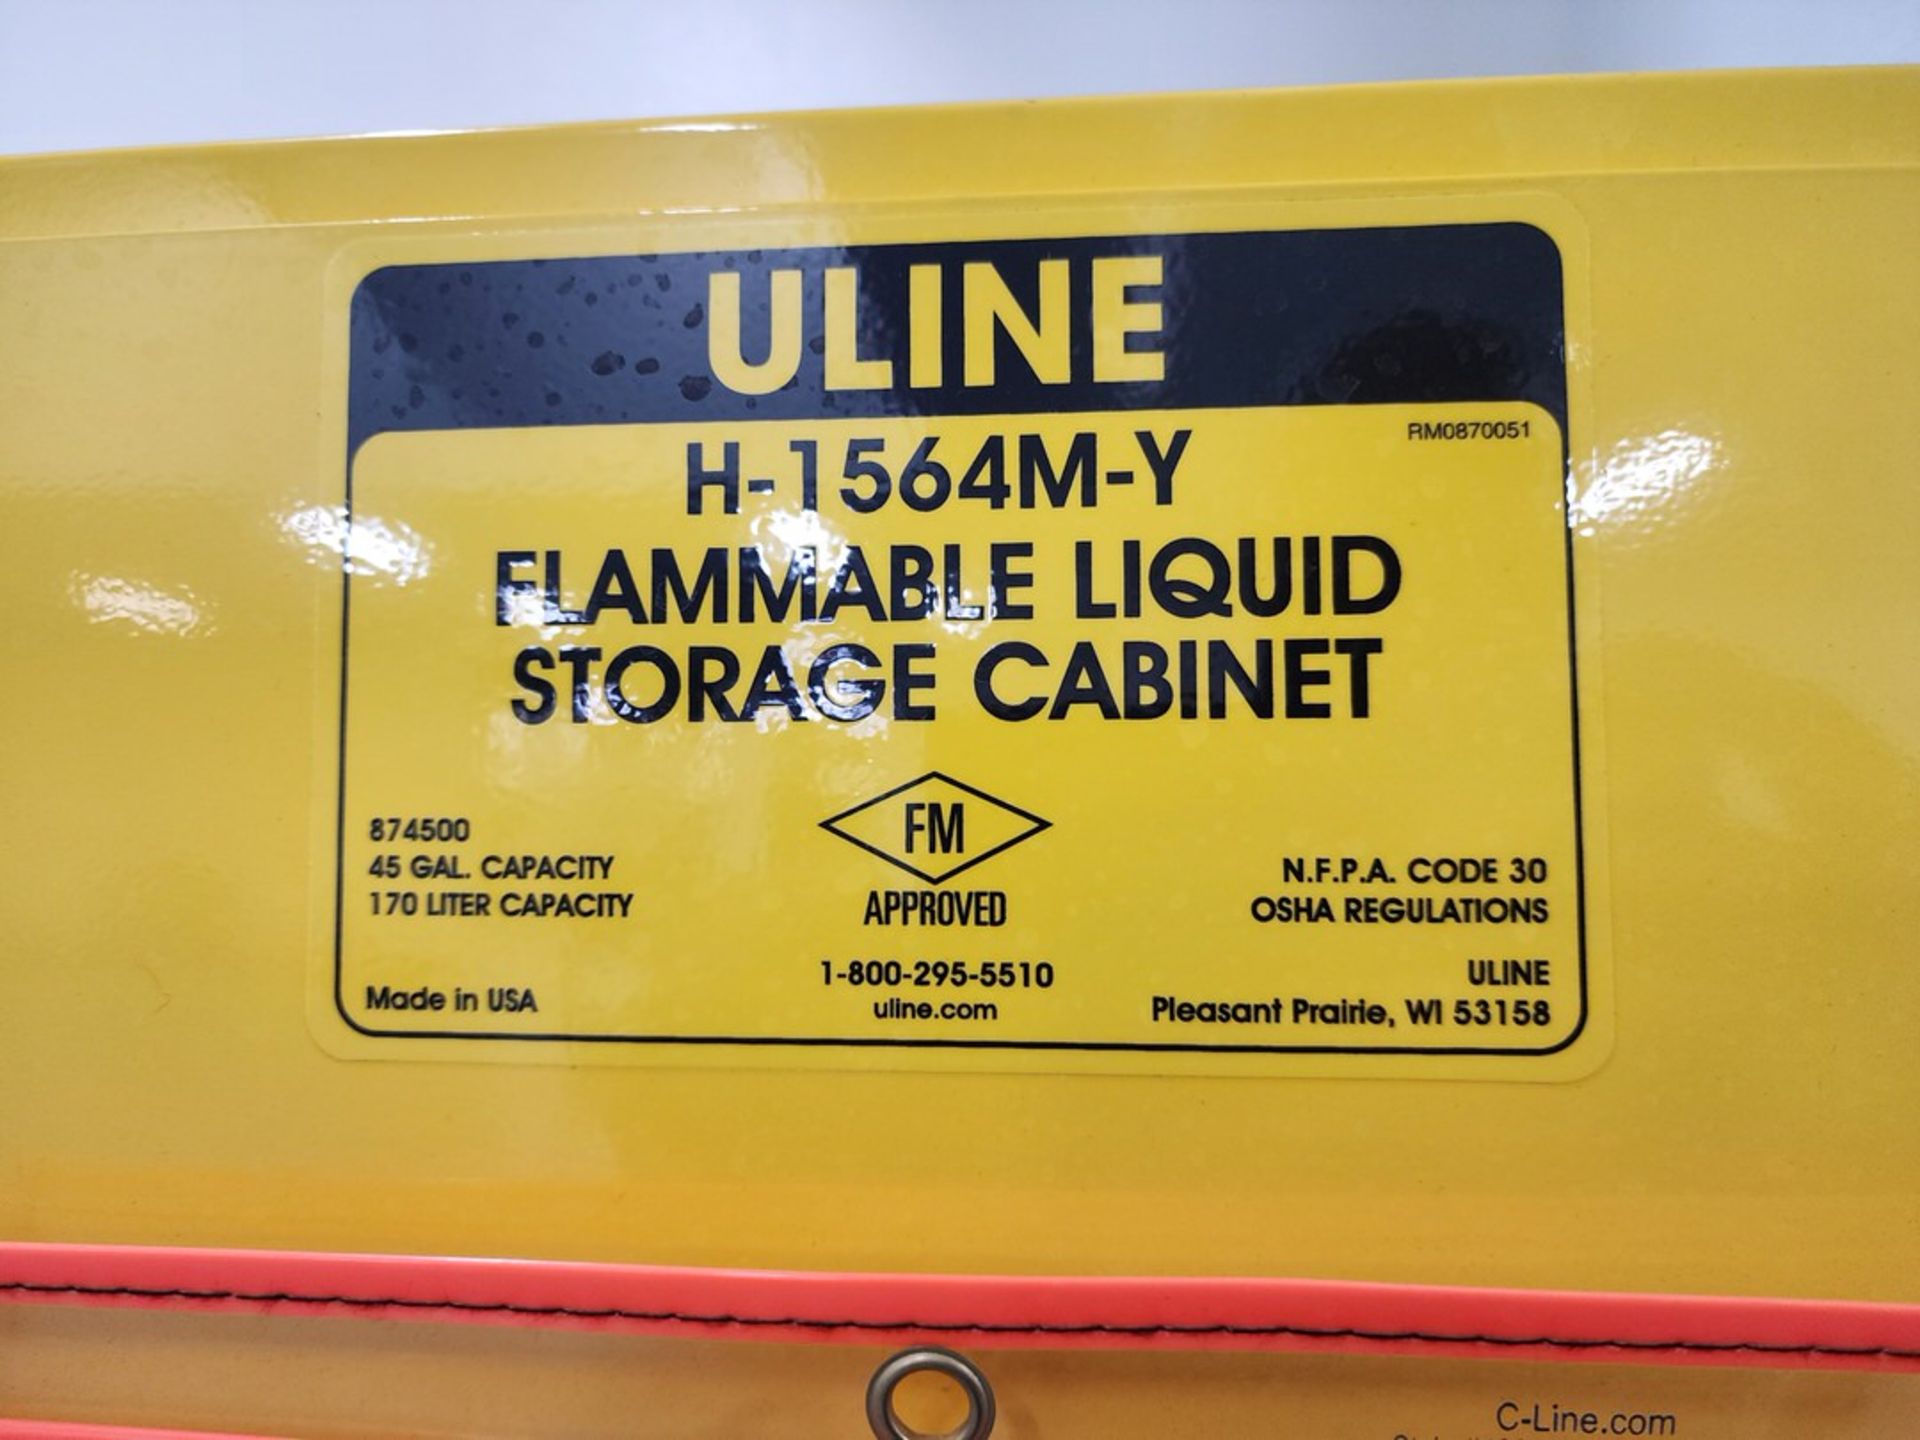 U-Line 45gal Flammable Cabinet - Image 3 of 3